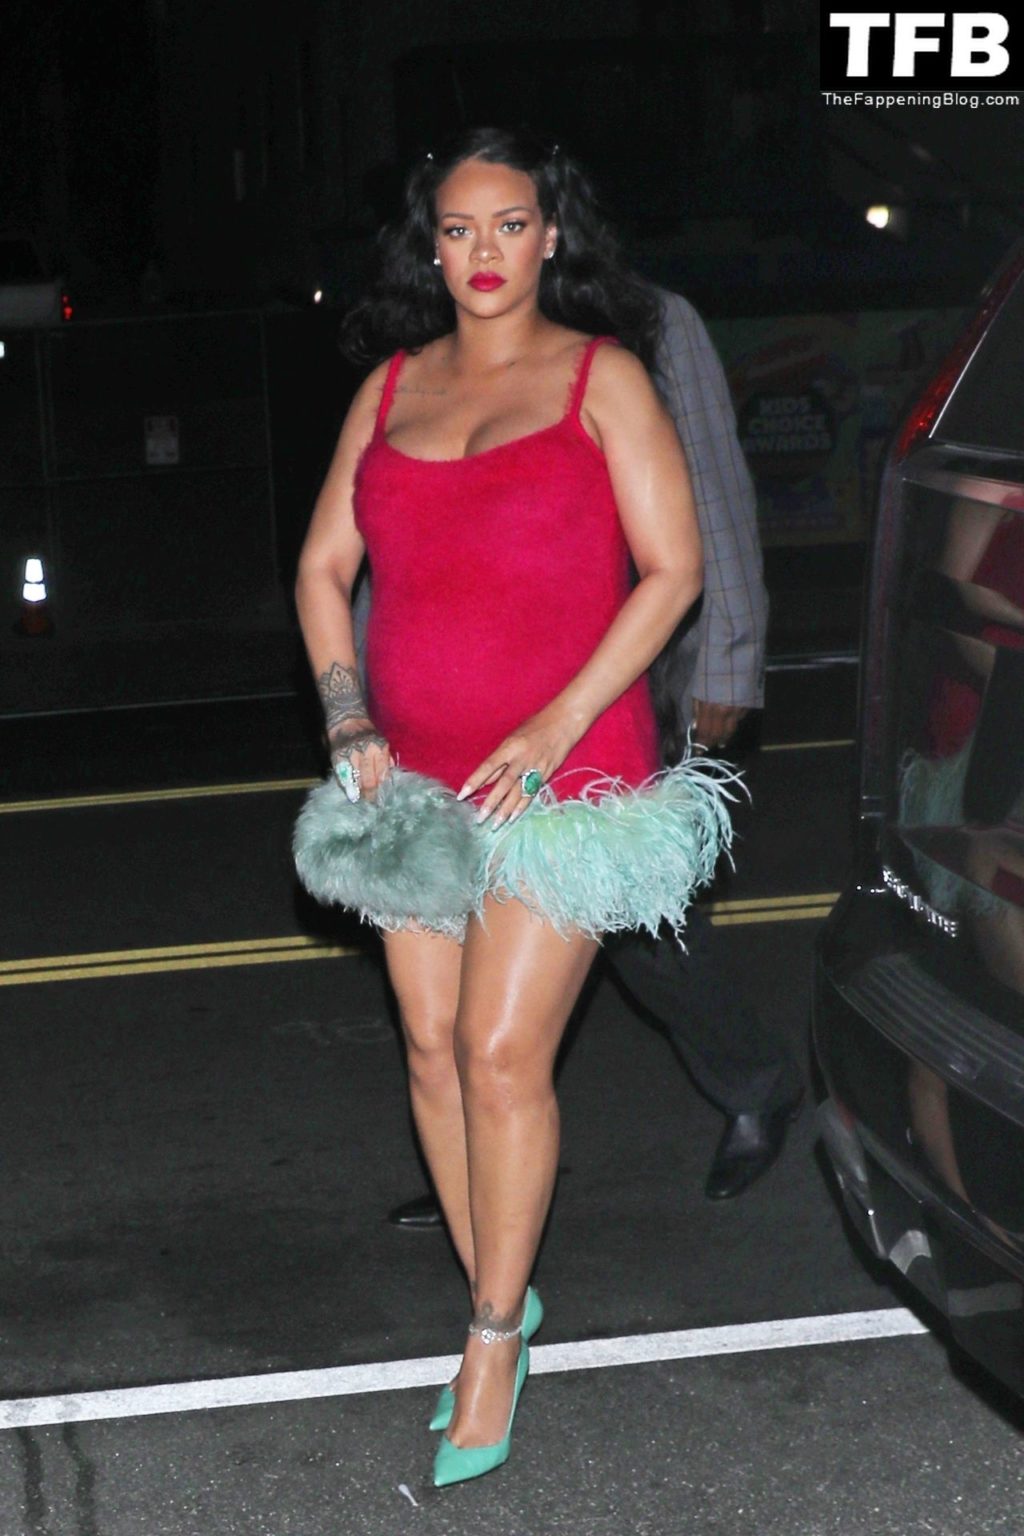 Rihanna Sexy The Fappening Blog 51 1024x1536 - Rihanna Puts Her Baby Bump on Display Grabbing Dinner at Giorgio Baldi (100 Photos)